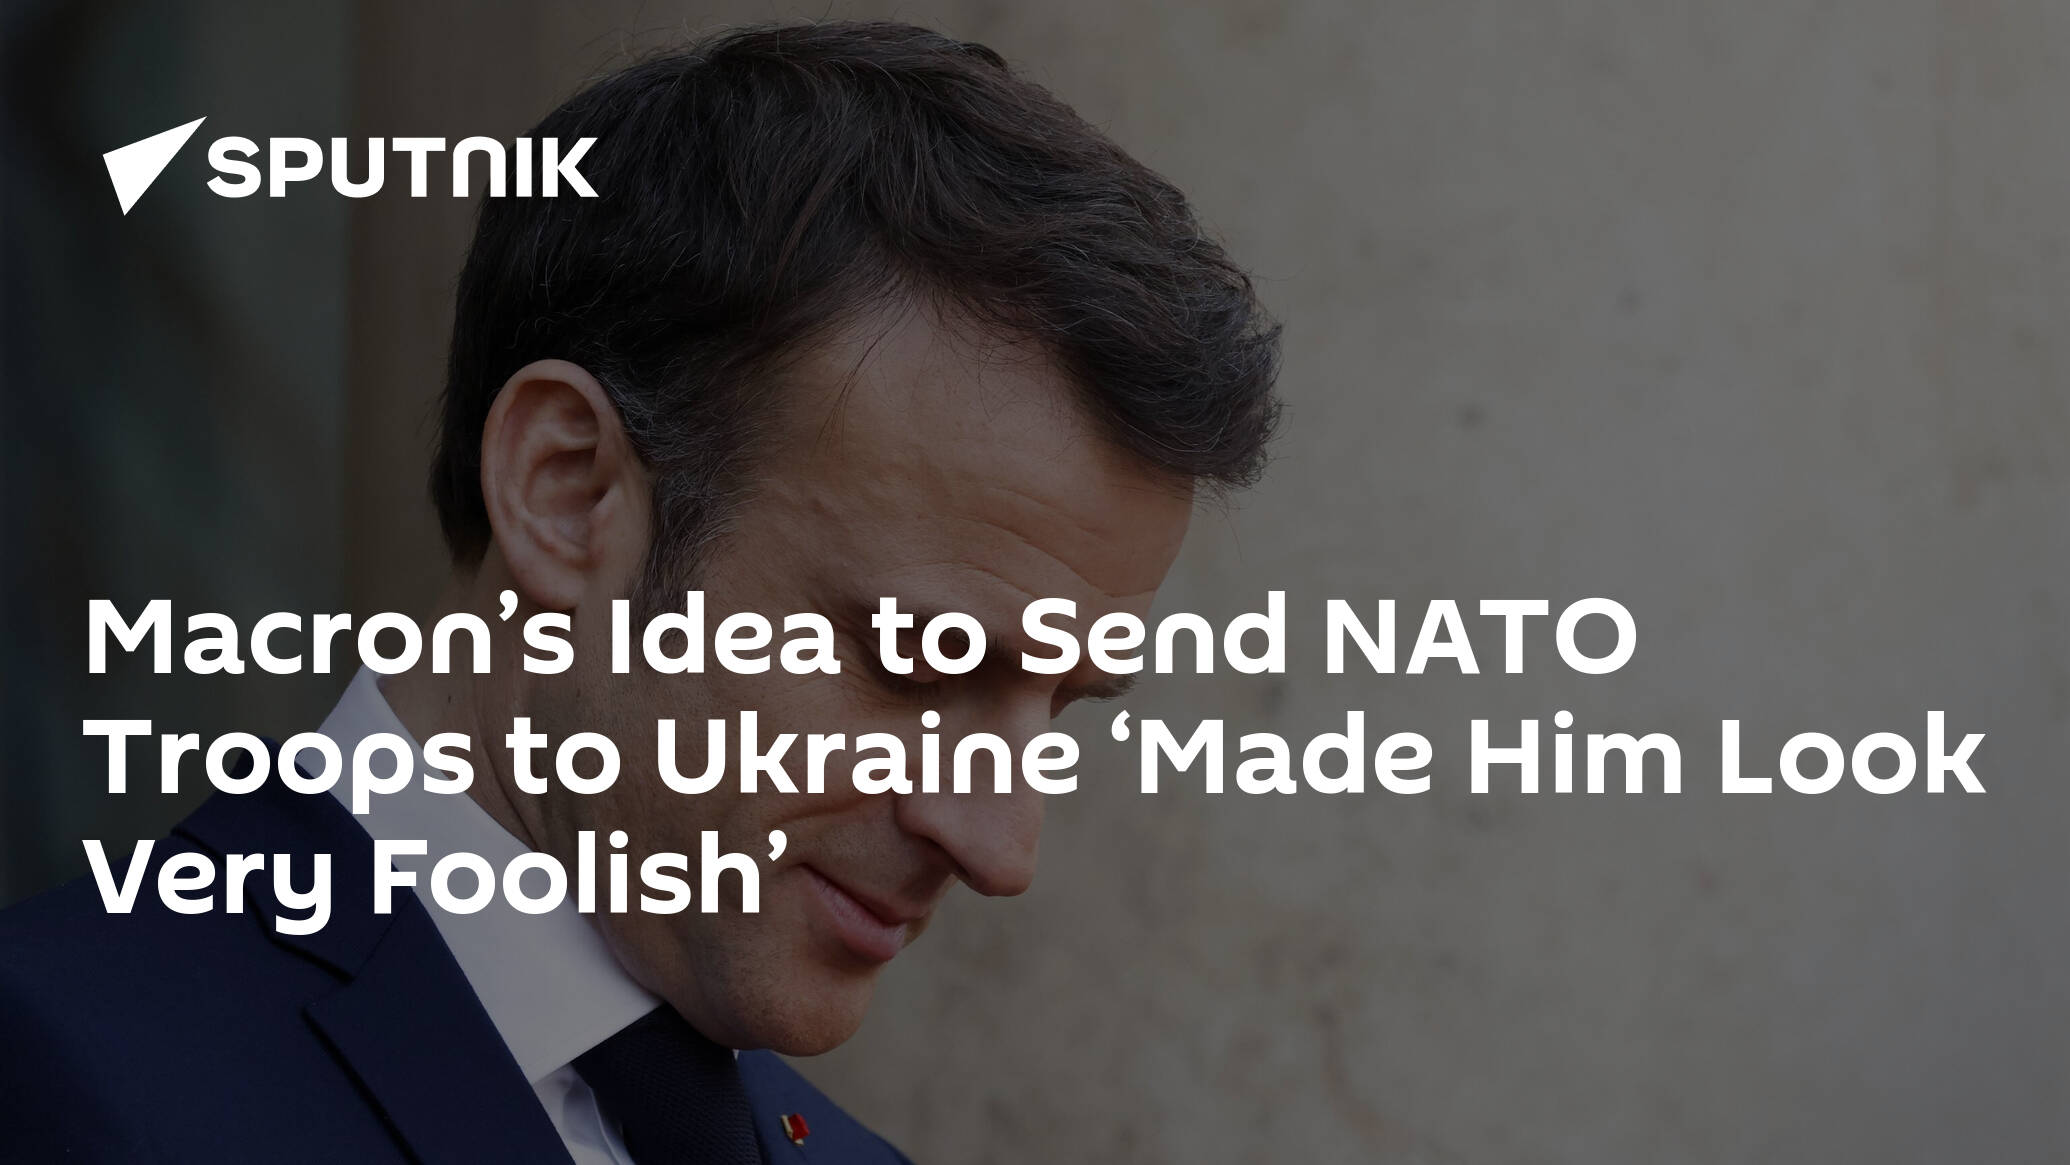 Macron’s Idea to Send NATO Troops to Ukraine ‘Made Him Look Very Foolish’